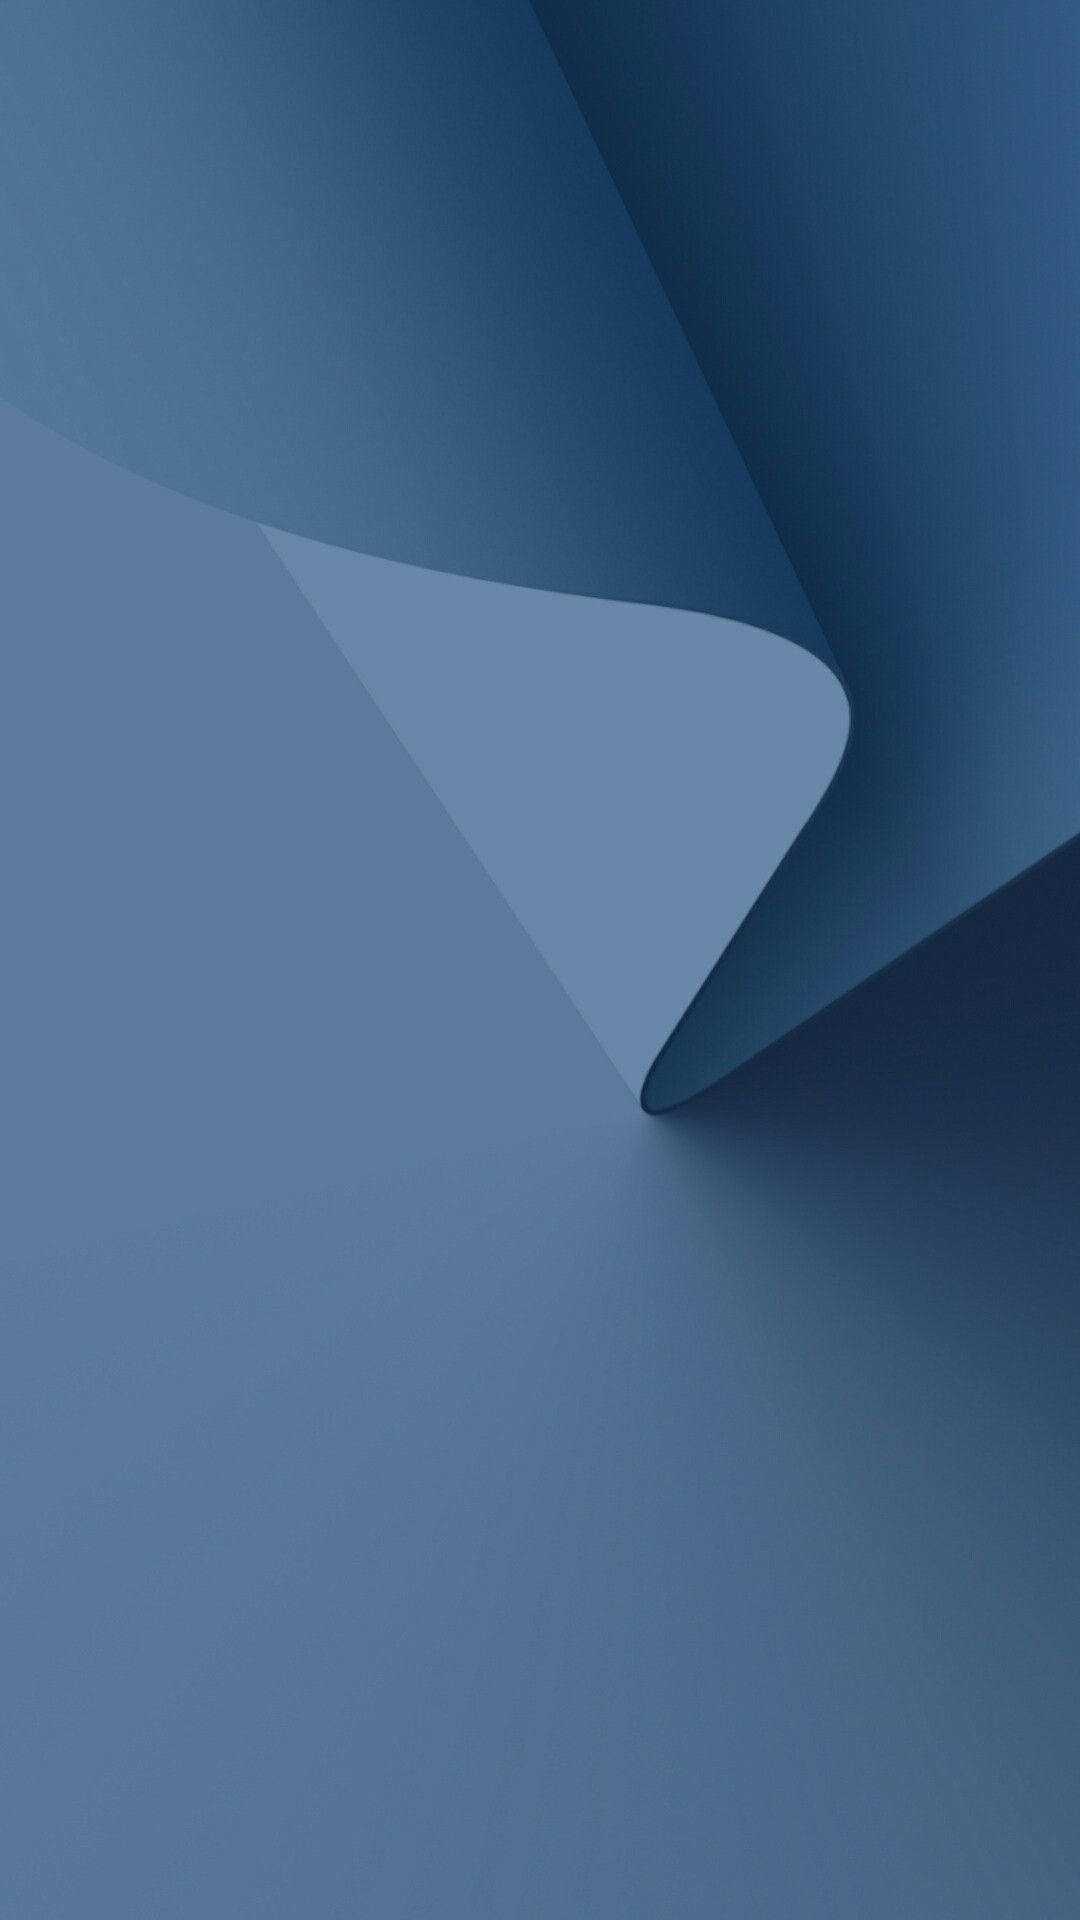 Iphone Wallpaper Blue And Grey - HD Wallpaper 